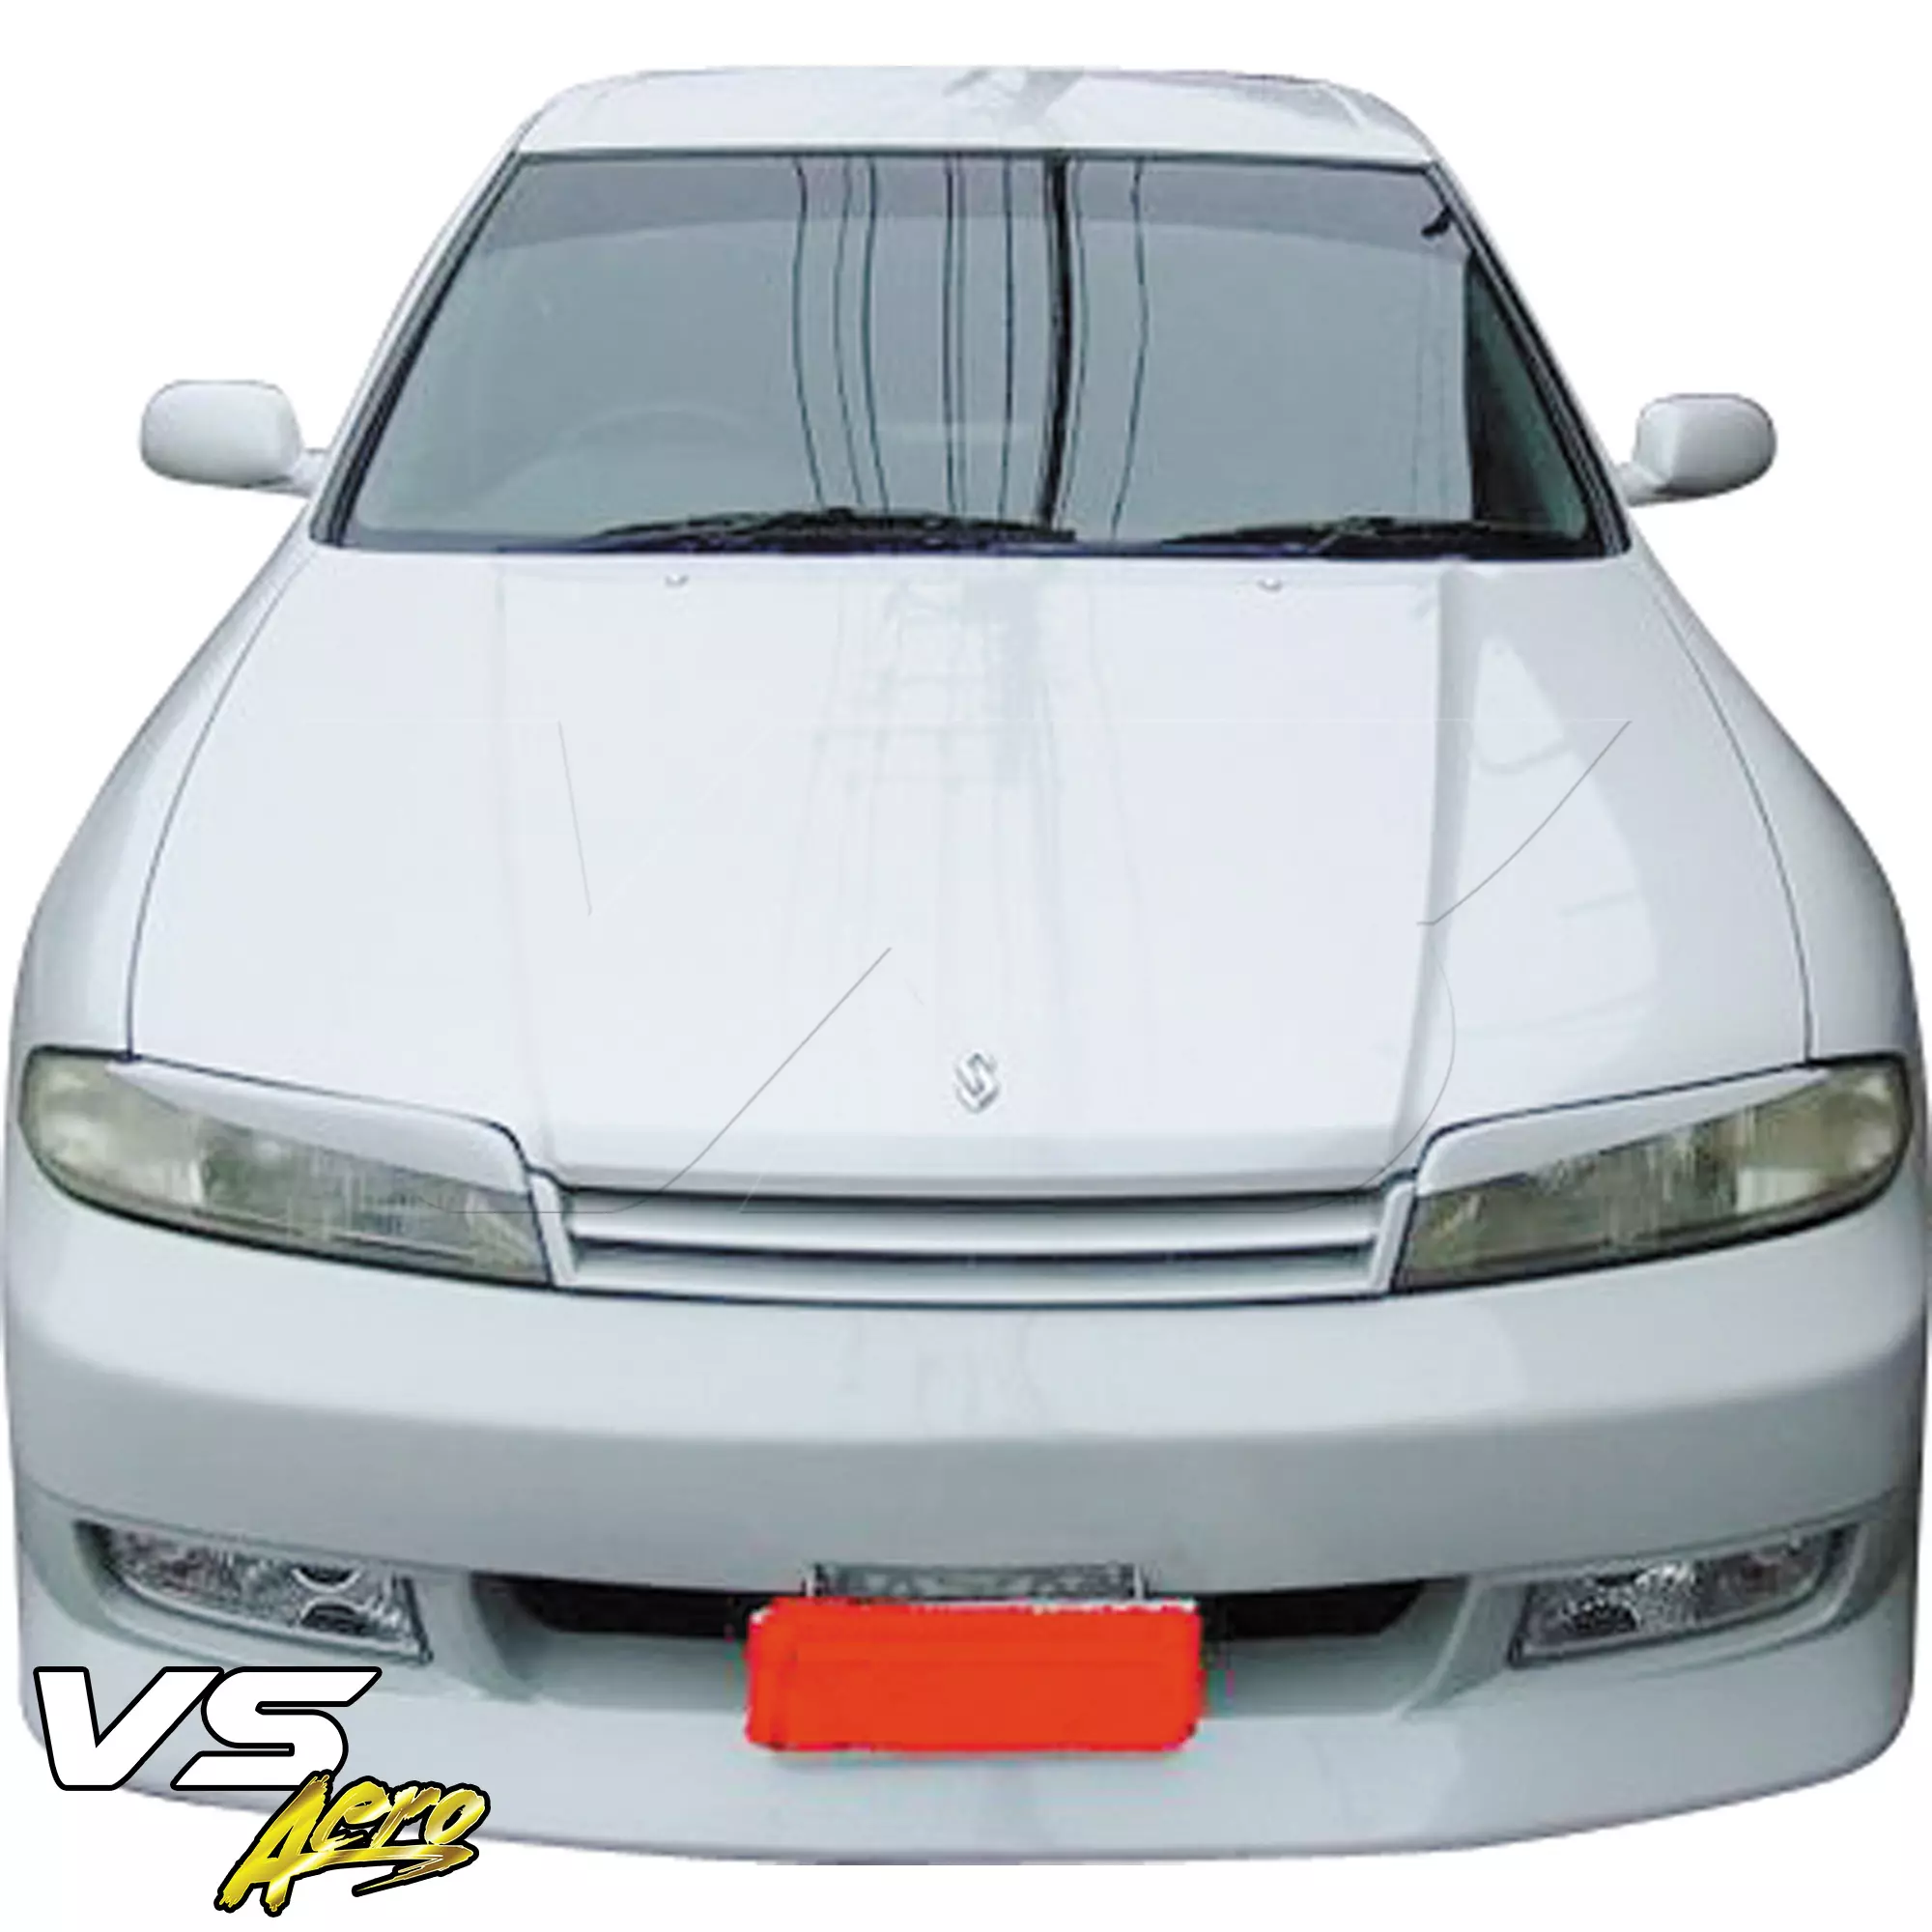 VSaero FRP FKON Body Kit 4pc > Nissan Skyline R33 GTS 1995-1998 > 4dr Sedan - Image 5